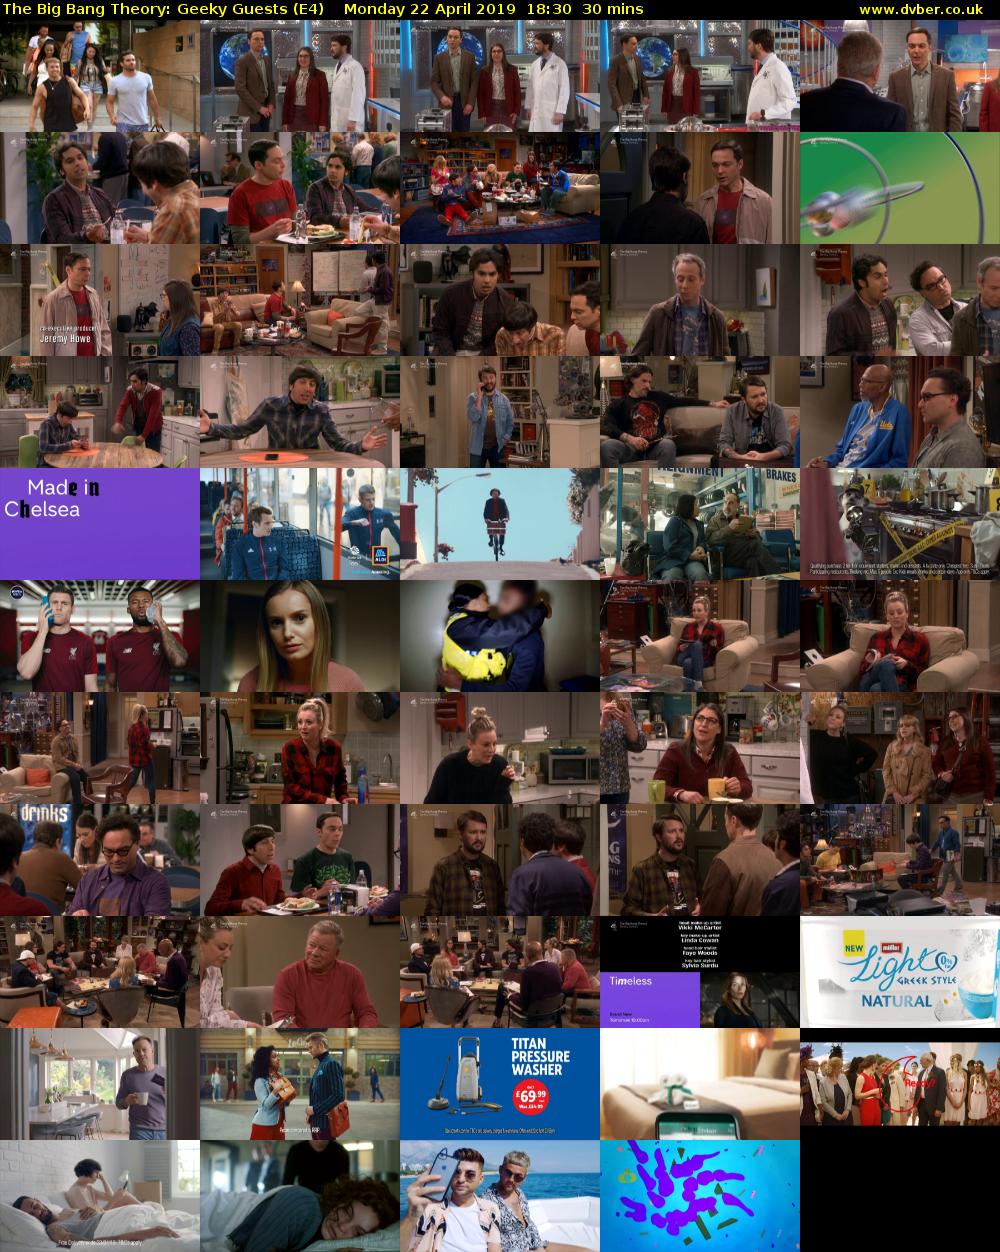 The Big Bang Theory: Geeky Guests (E4) Monday 22 April 2019 18:30 - 19:00